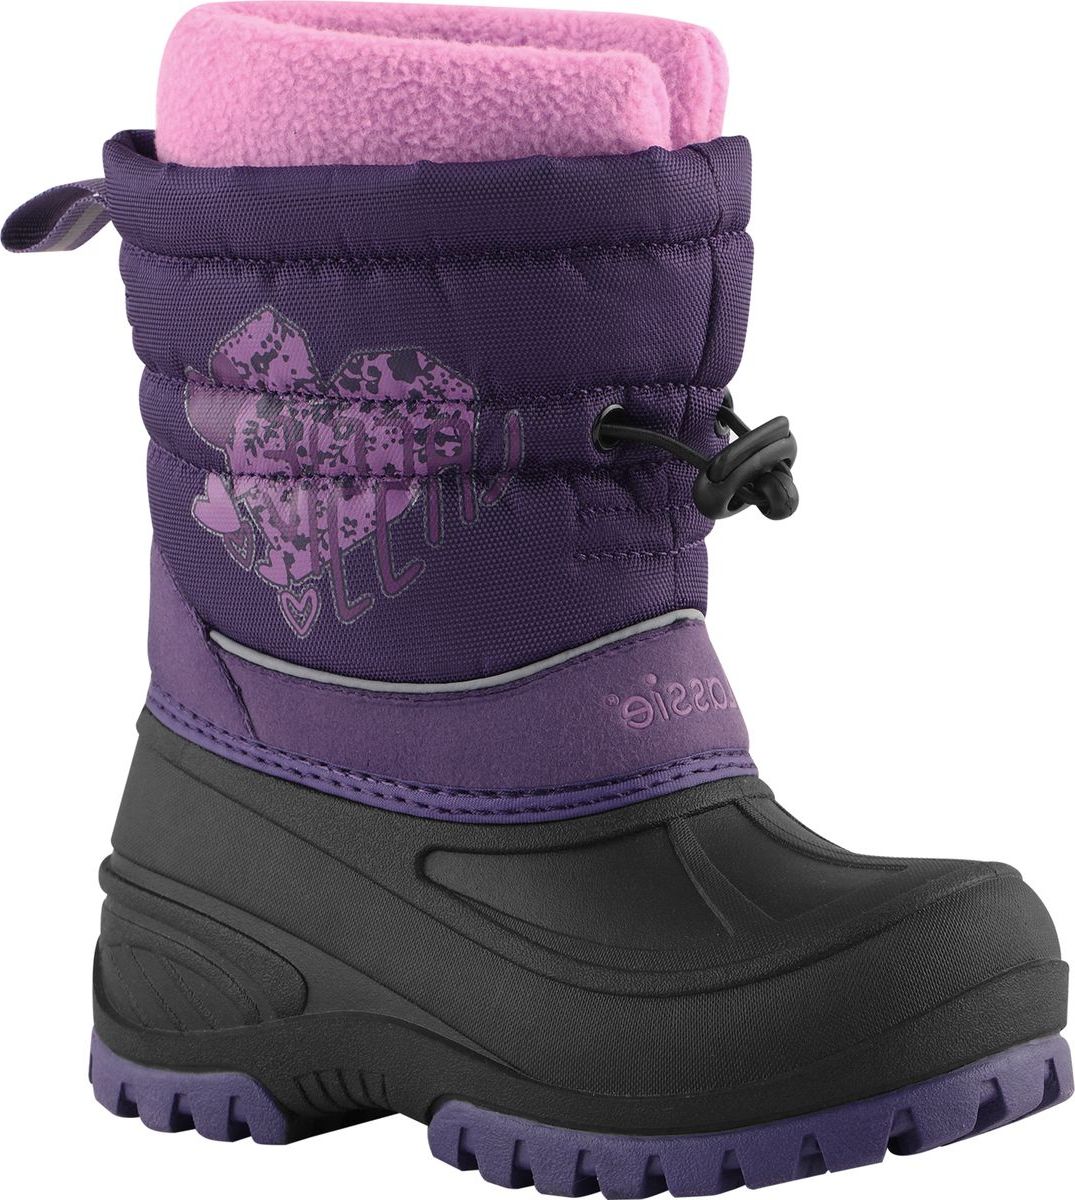 Ботинки детские Lassie Coldwell, цвет: пурпурный. 7691215950. Размер 25